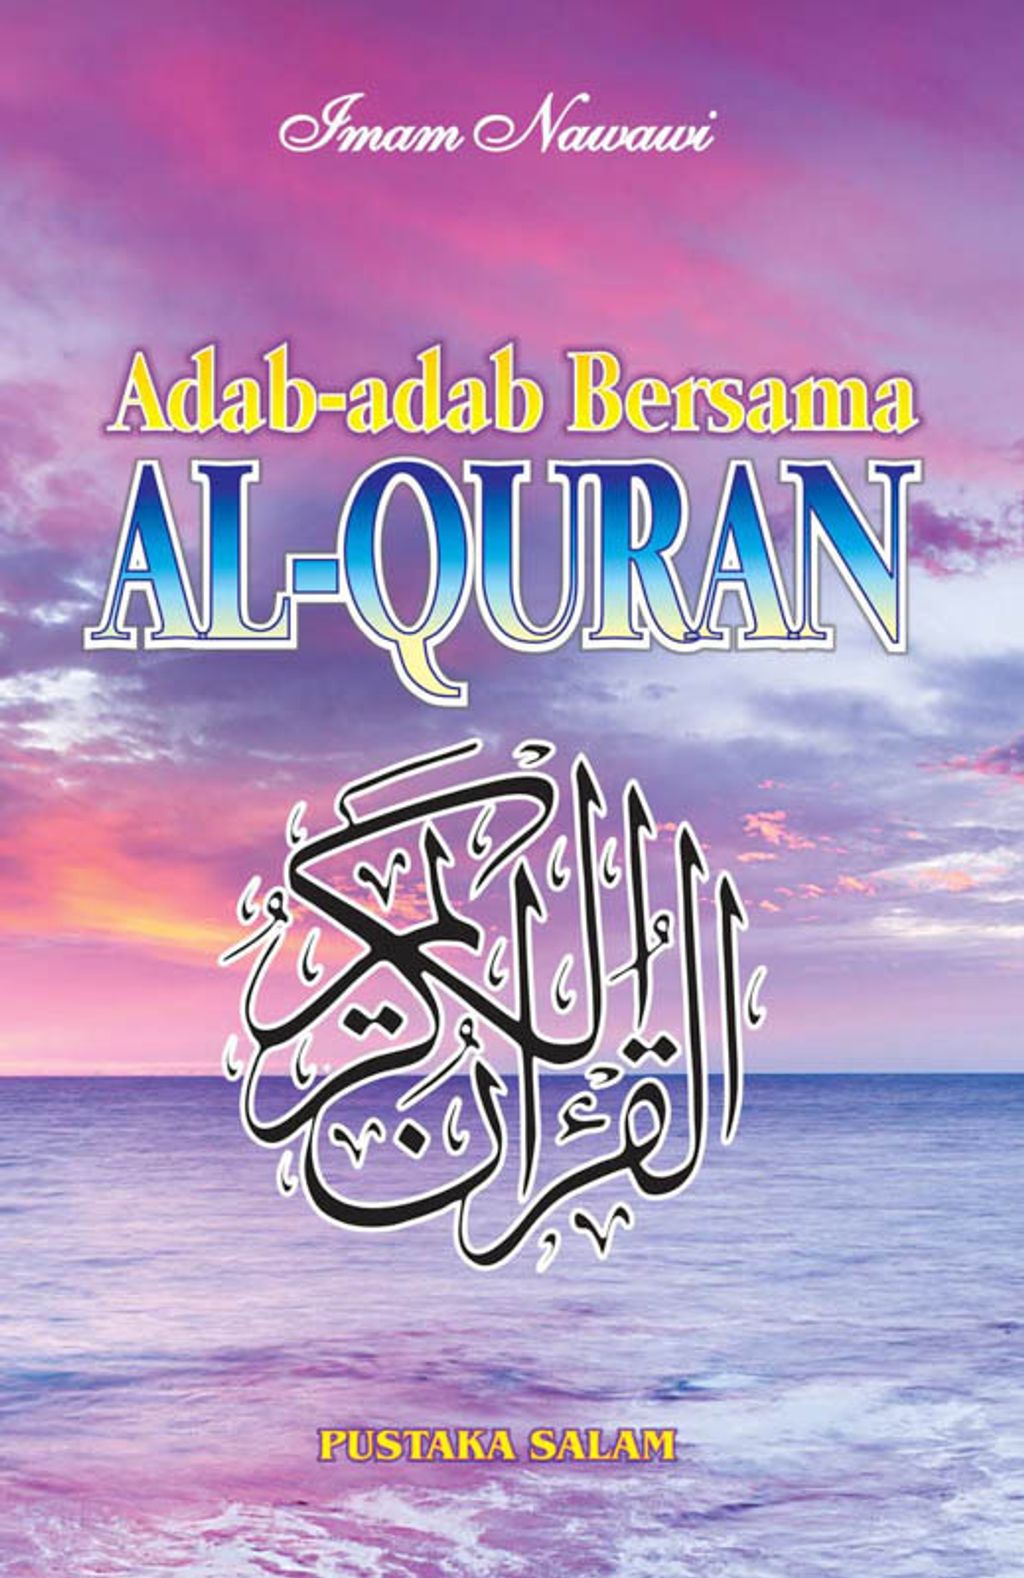 Adab-adab-Bersama-Al-Quran